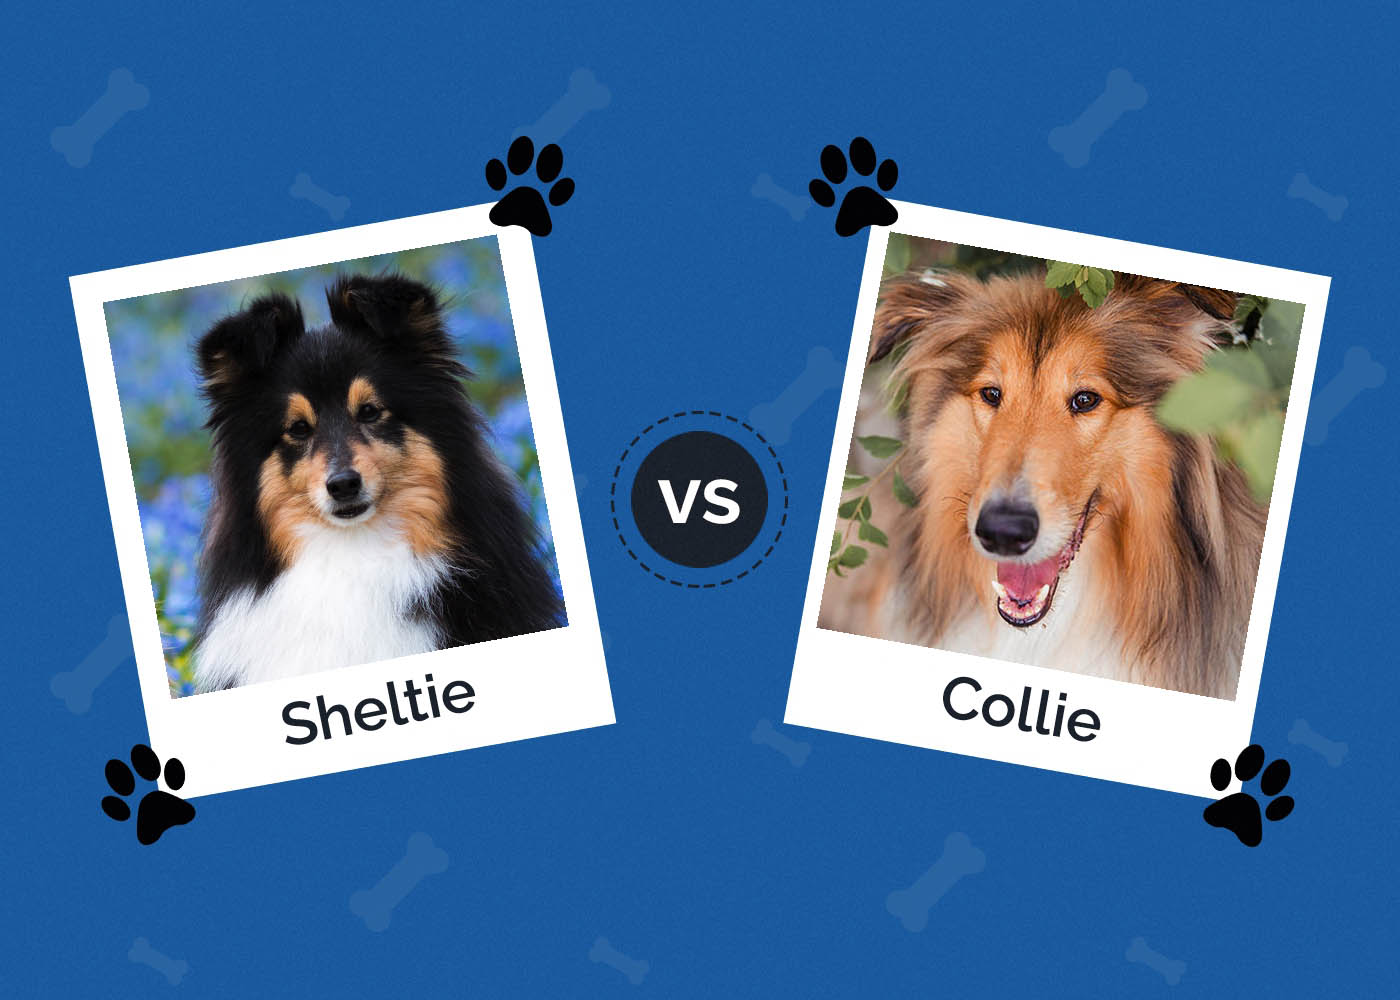 Sheltie vs Collie